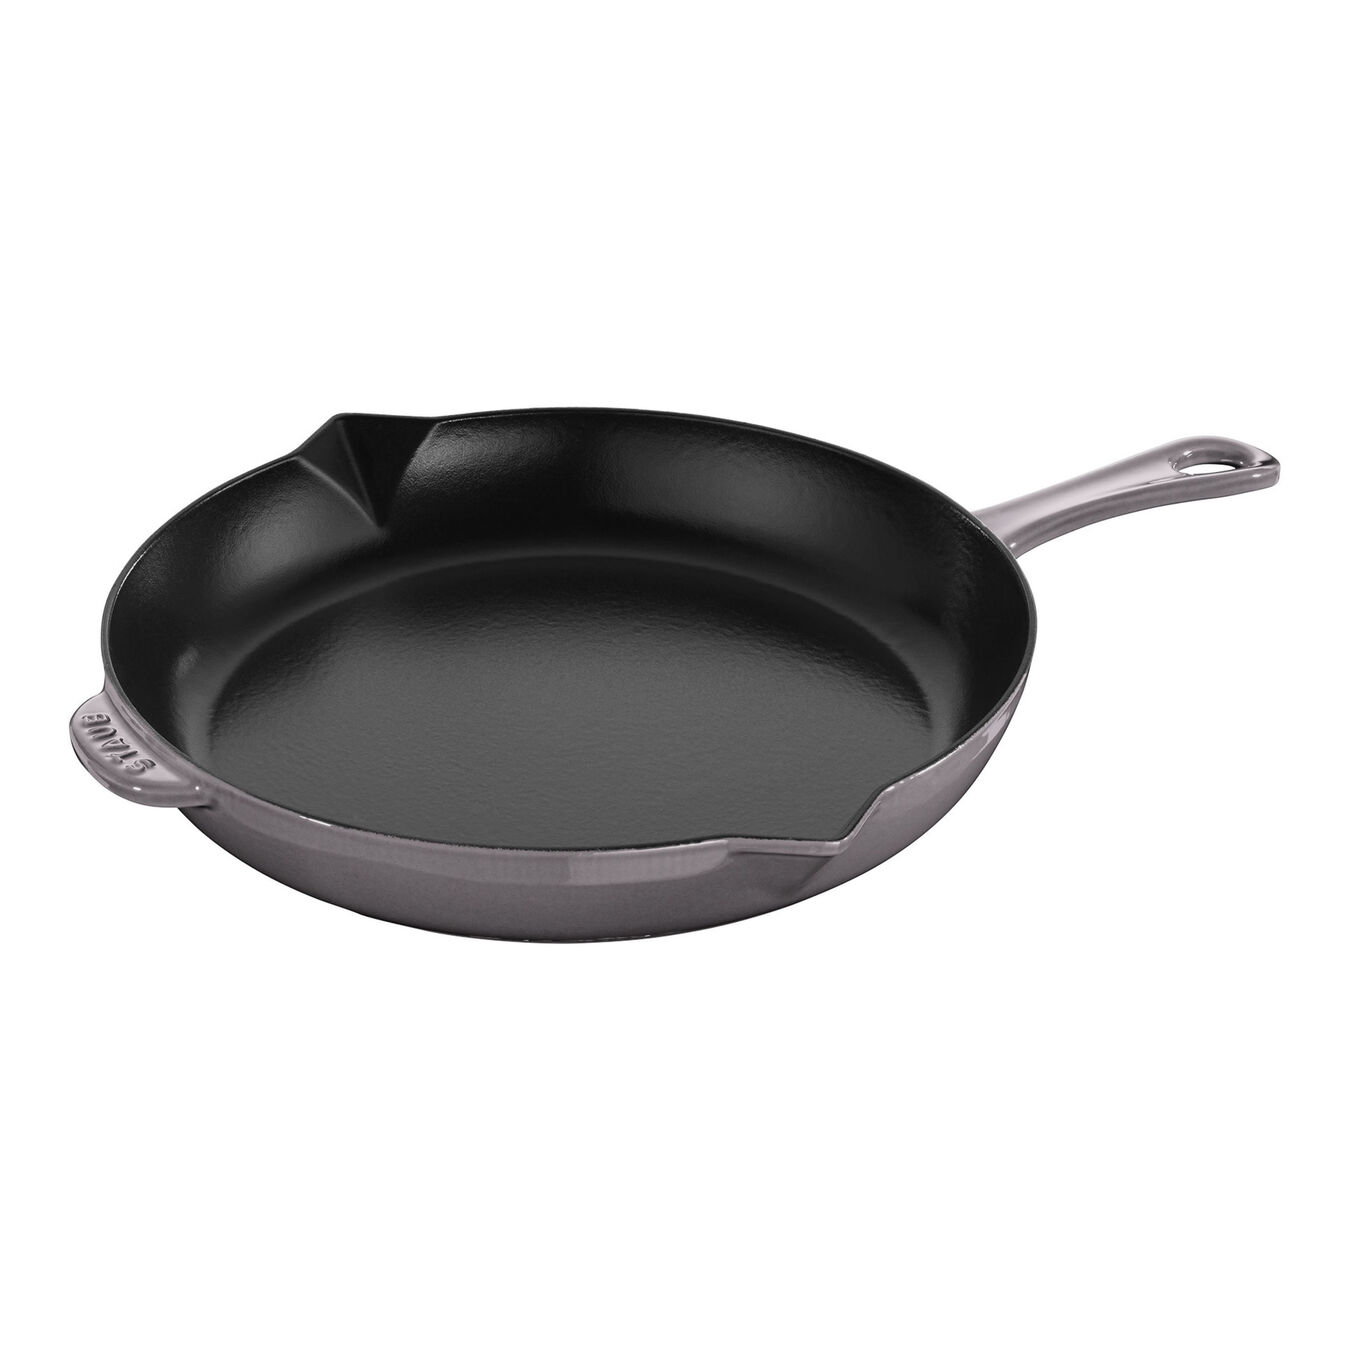 12-inch, Fry Pan, graphite grey,,large 1